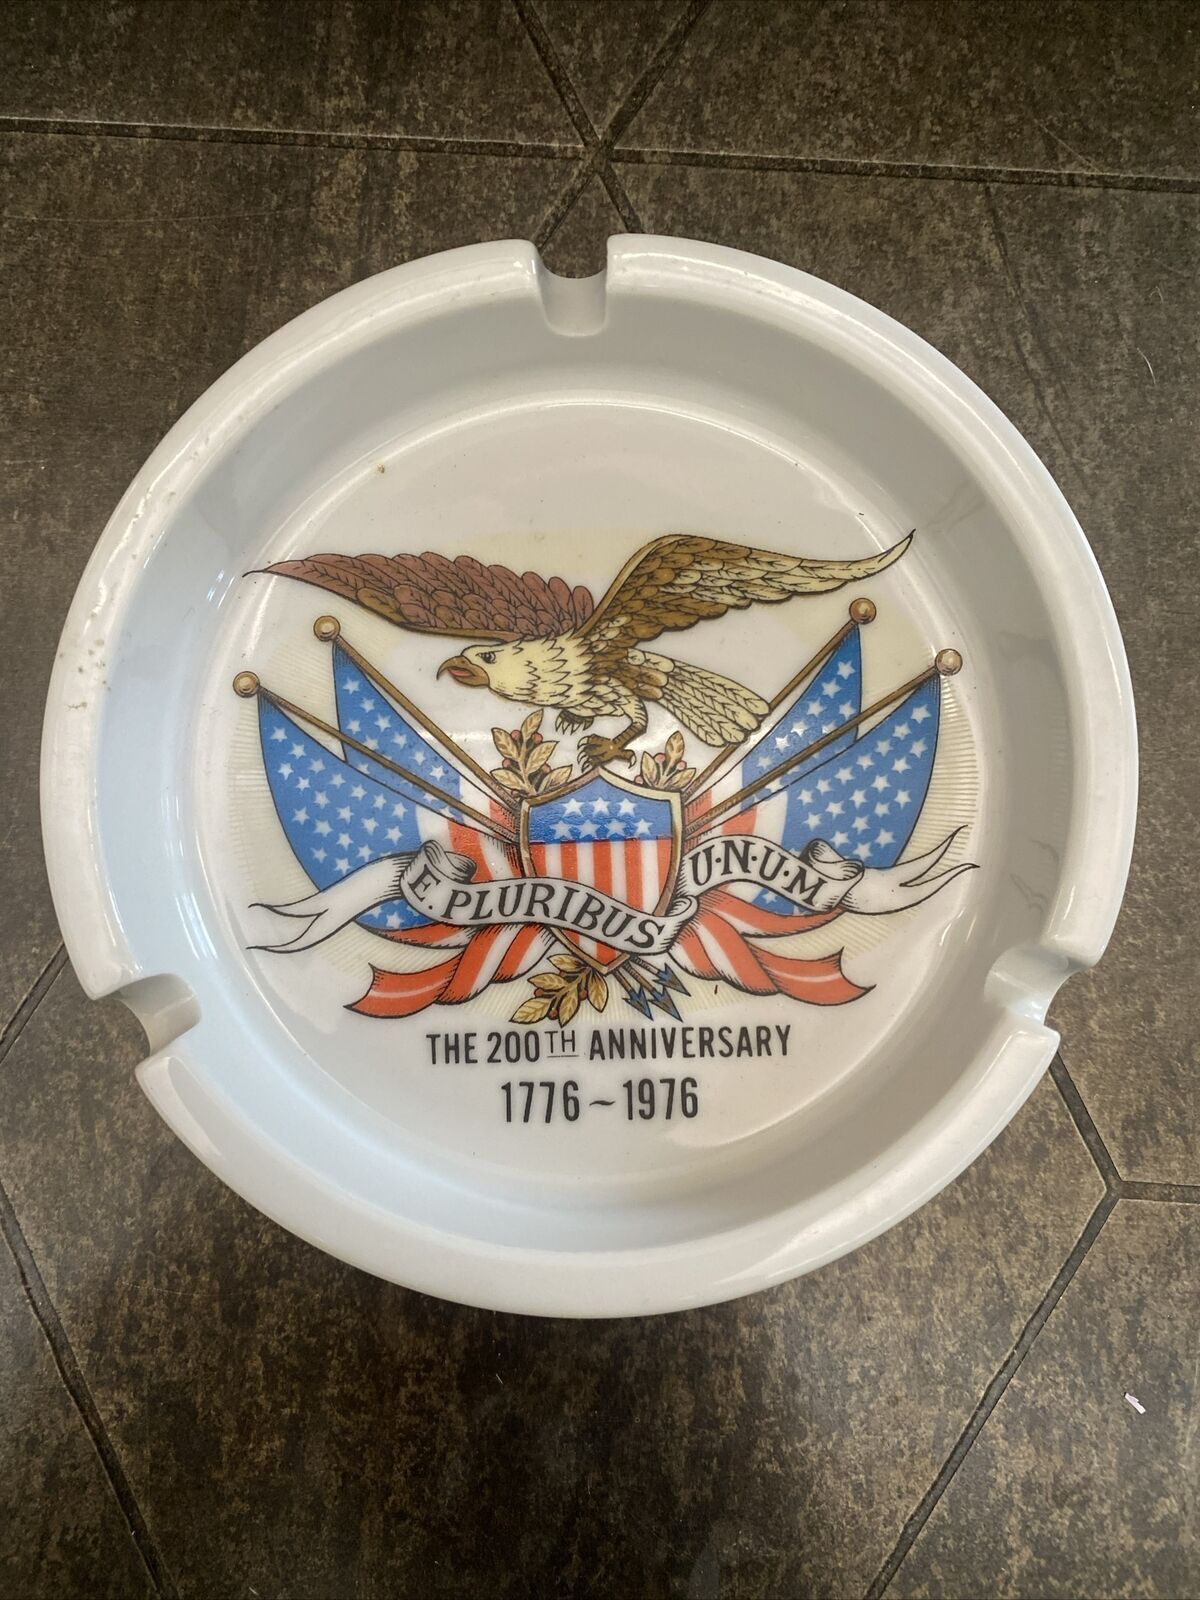  America\'s Bicentennial Ceramic Ashtray E. Pluribus Unum 200th Anniversary USA  